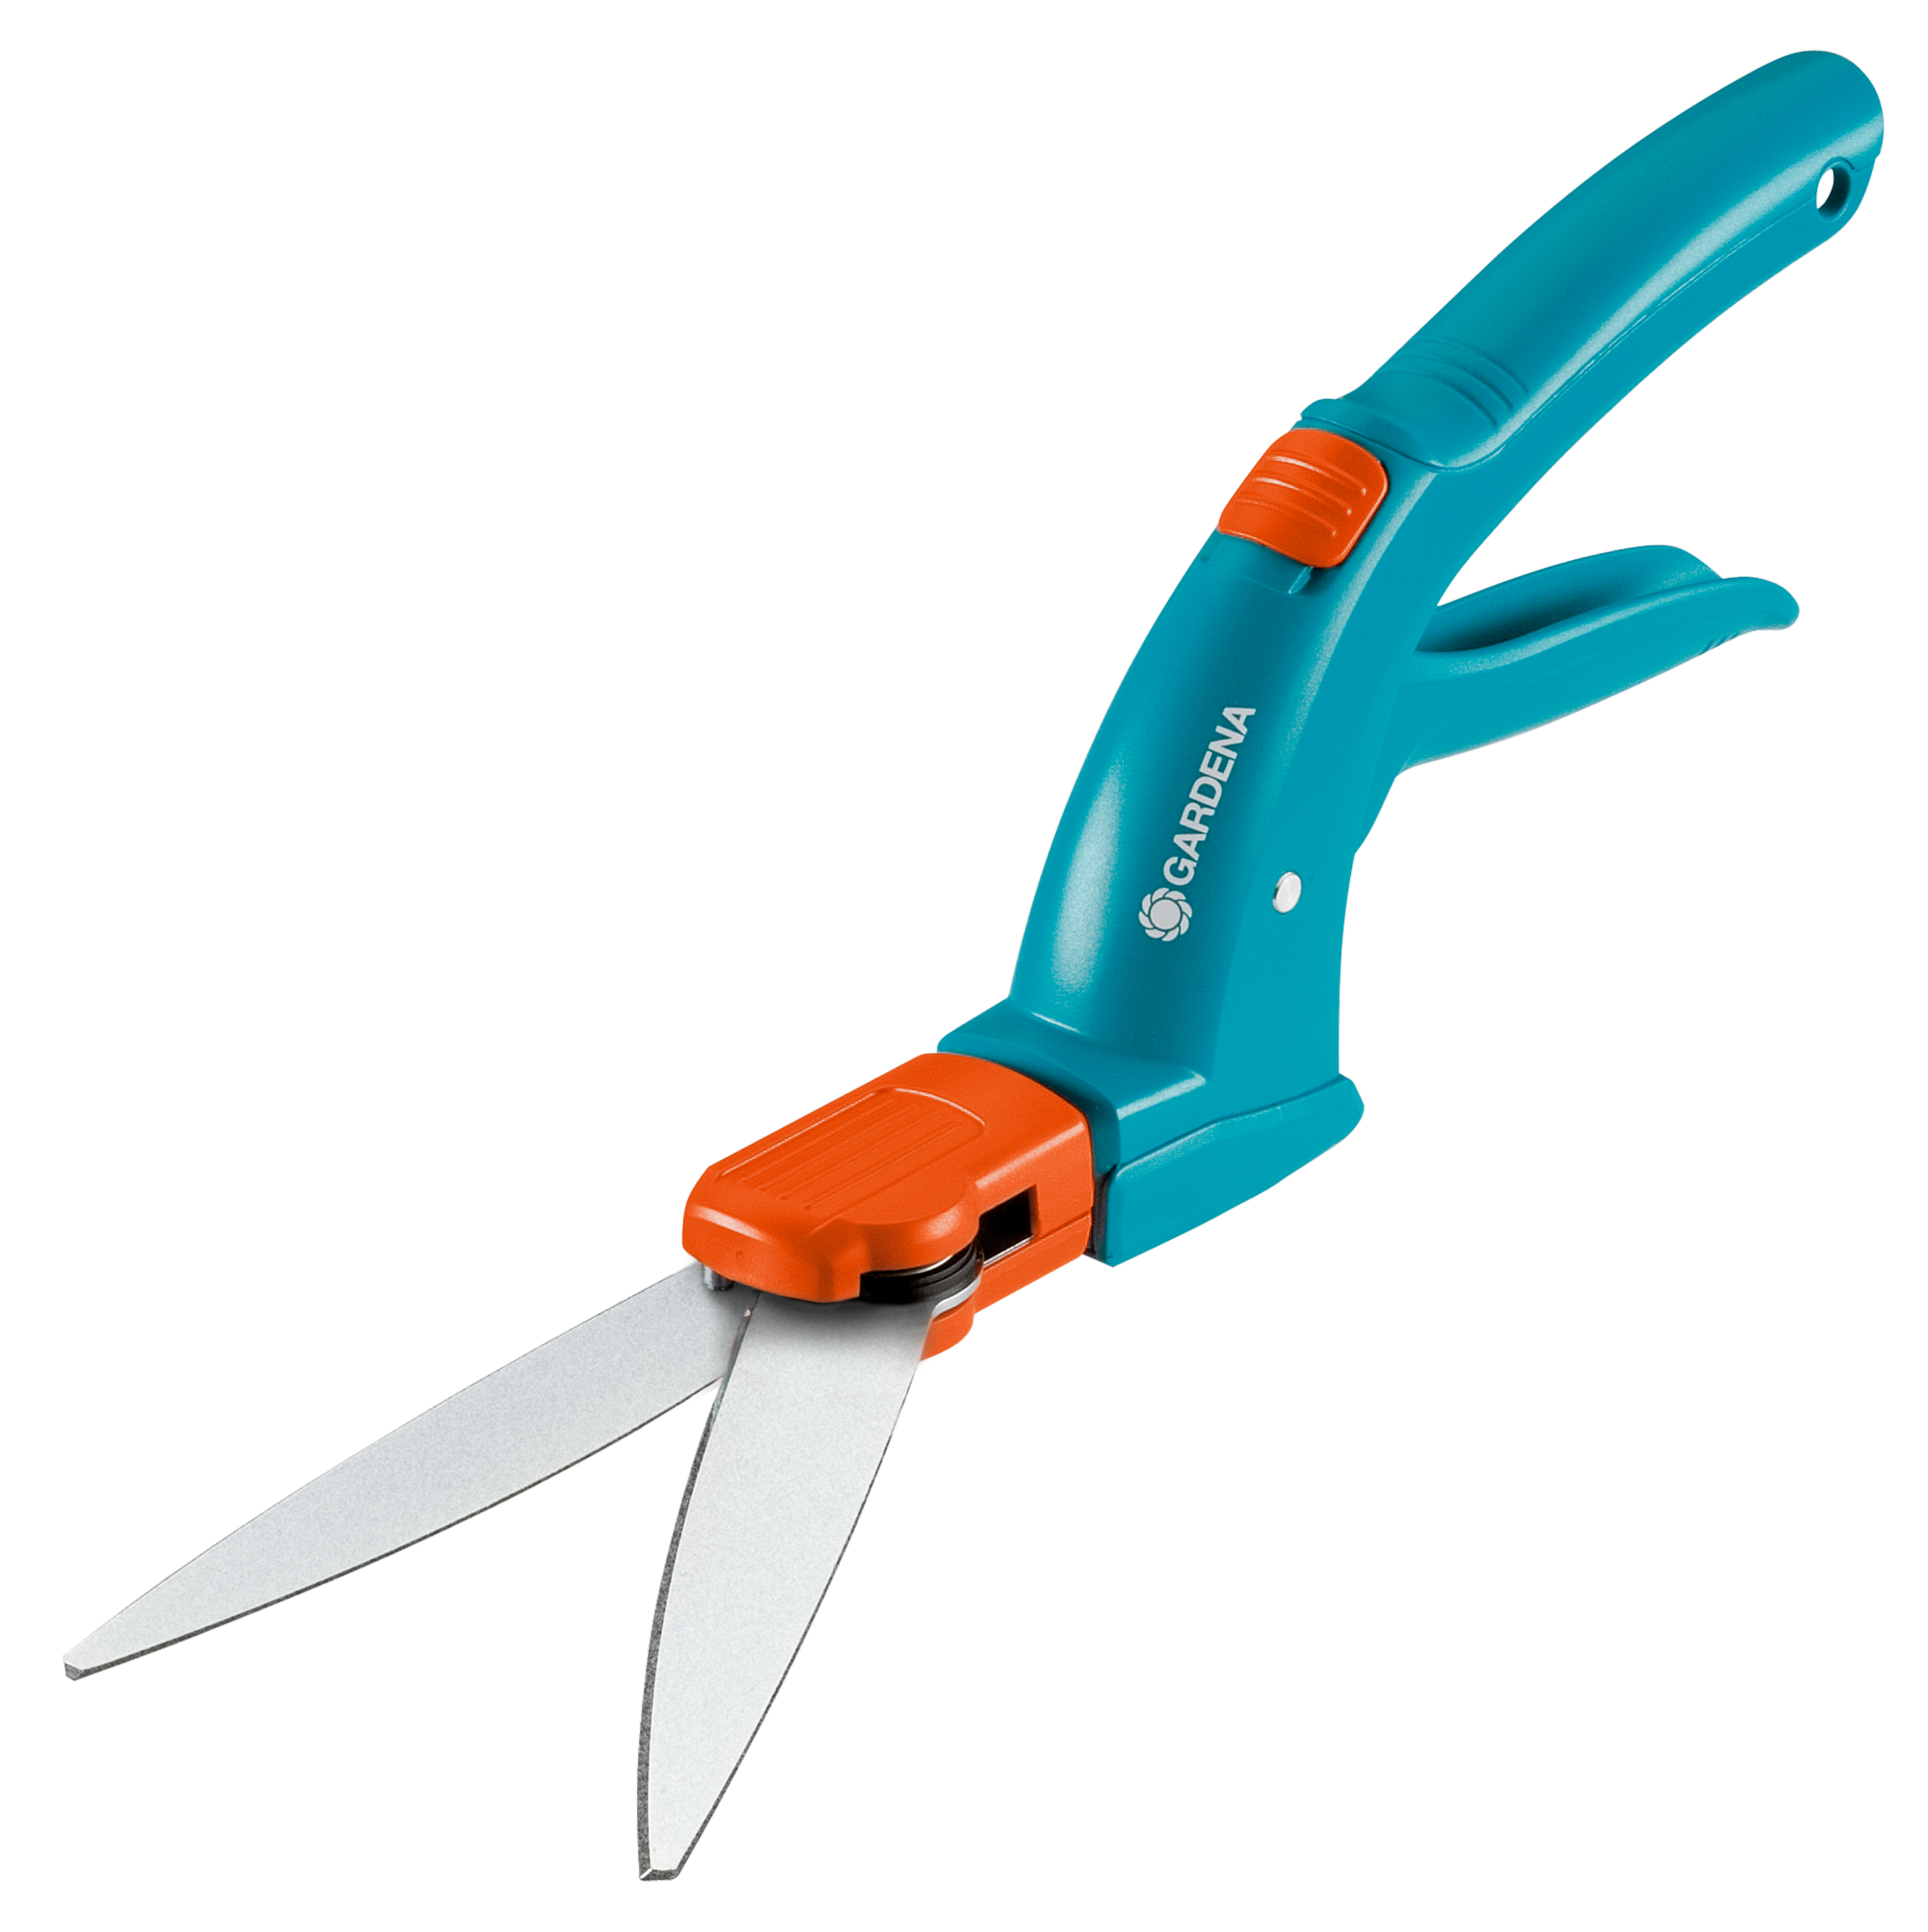 shears clipart lawn tool